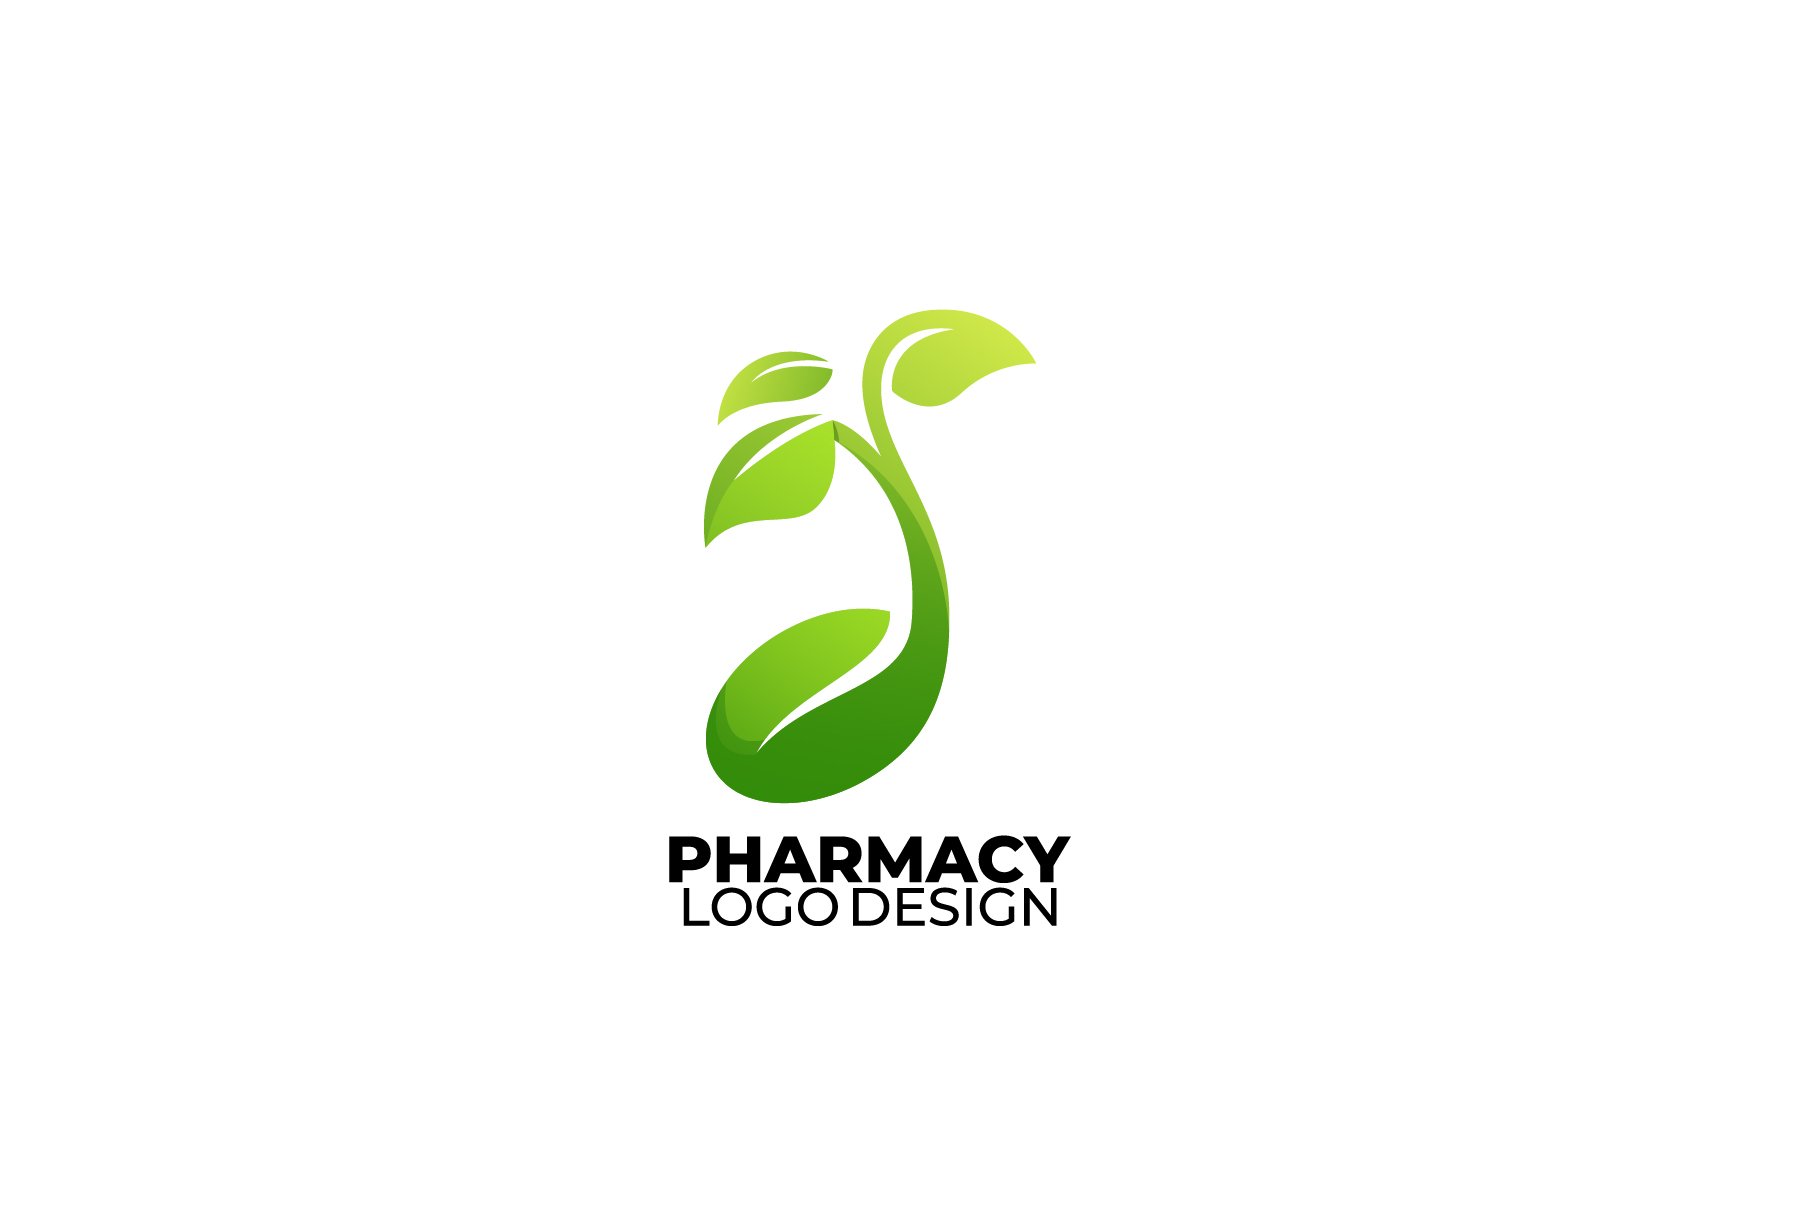 pharmacy vector logo premium color cover image.